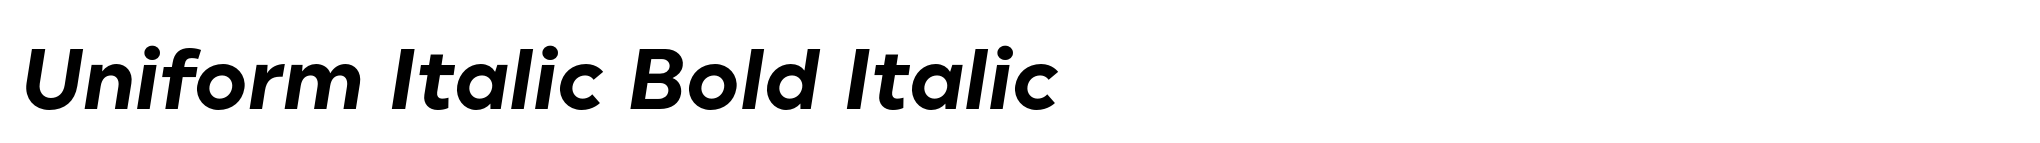 Uniform Italic Bold Italic image